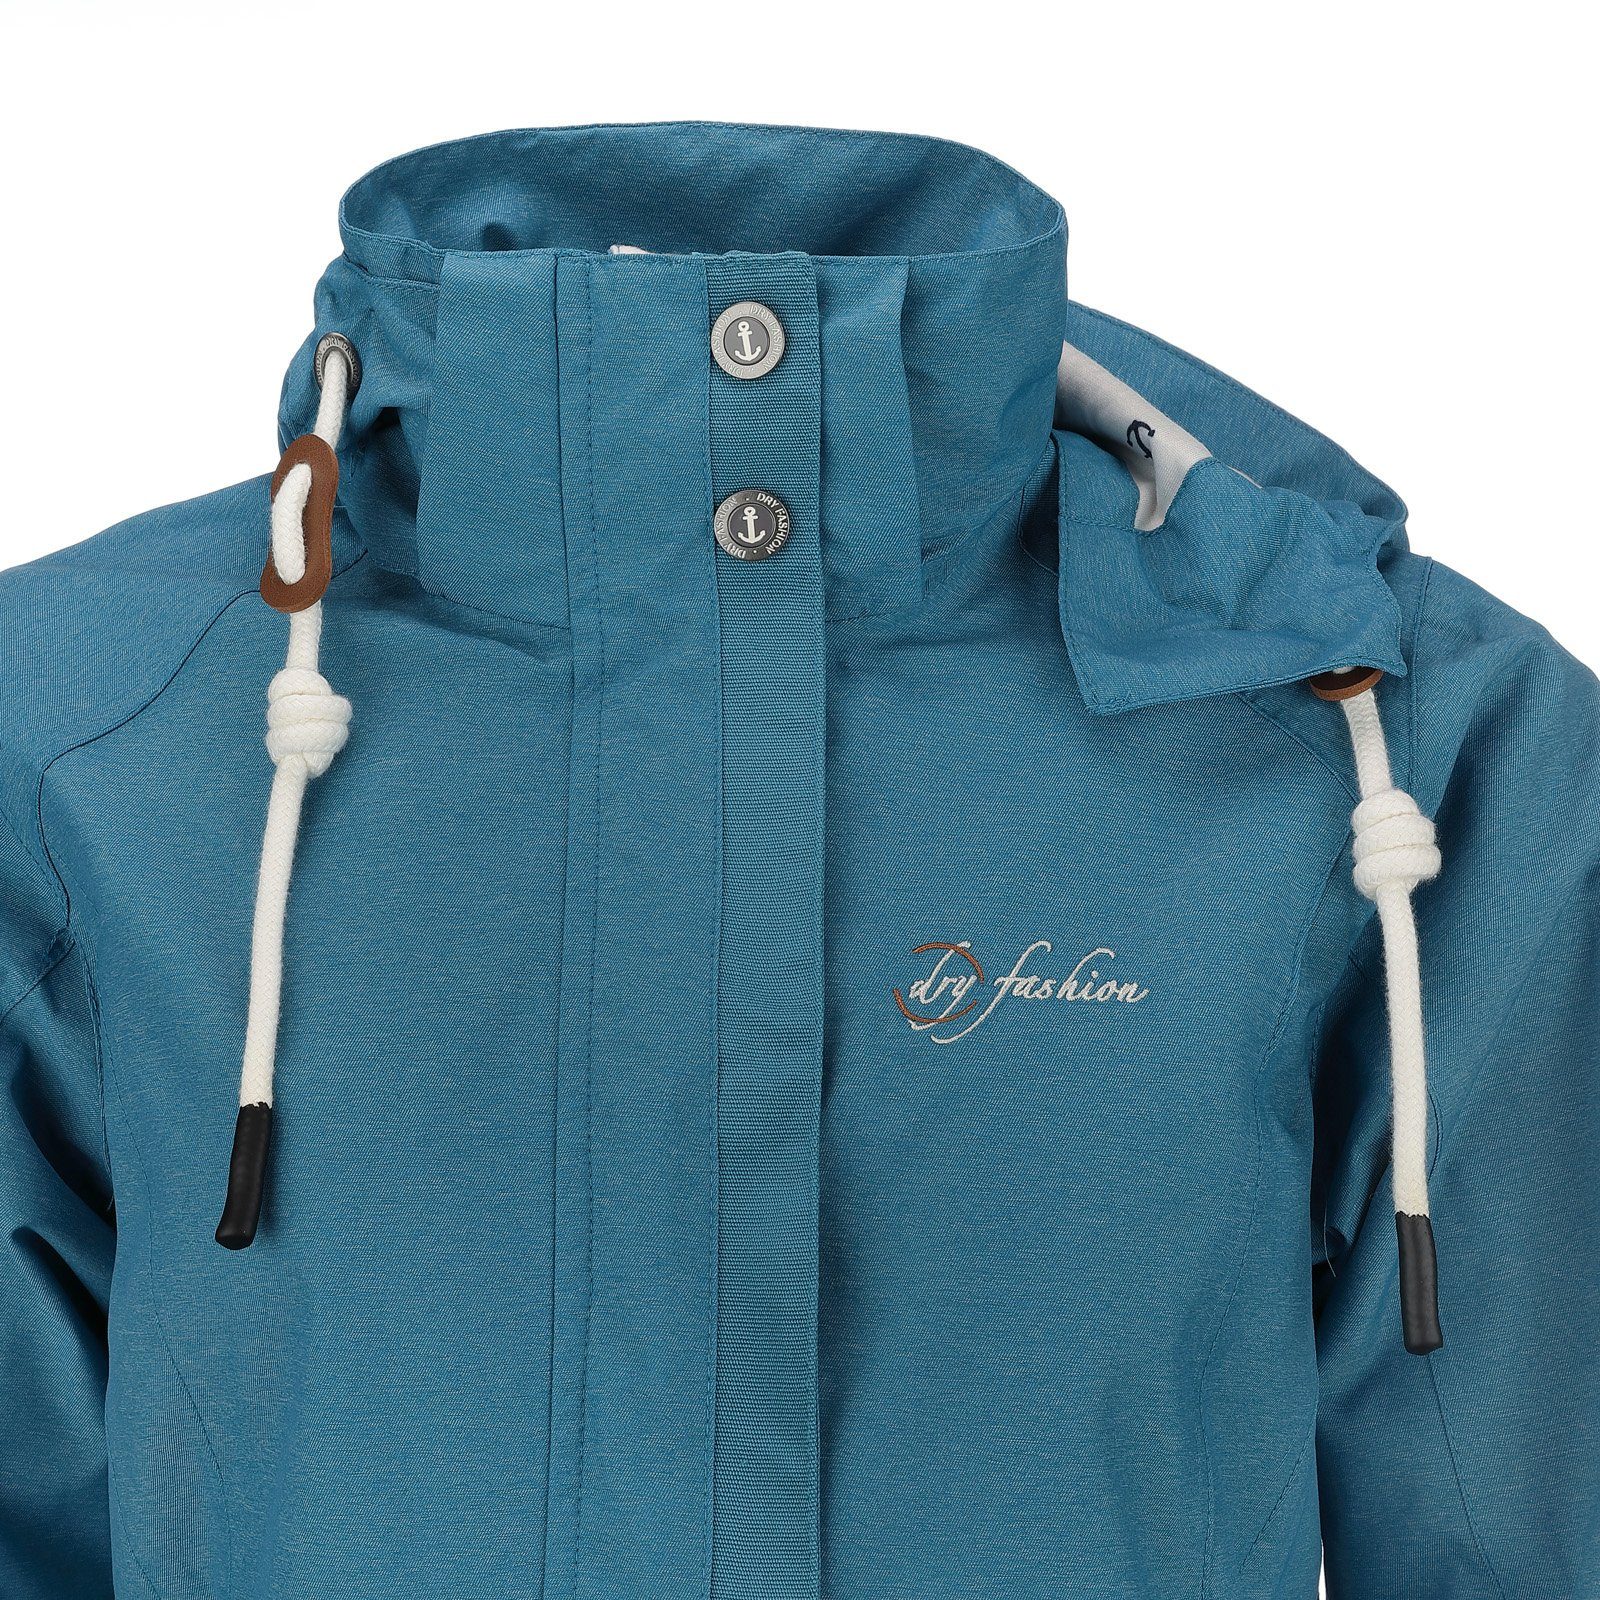 abnehmbarer Fashion Dry Kapuze Jacke - blau Greetsiel melange Damen mit Funktionsjacke wasserdicht winddicht